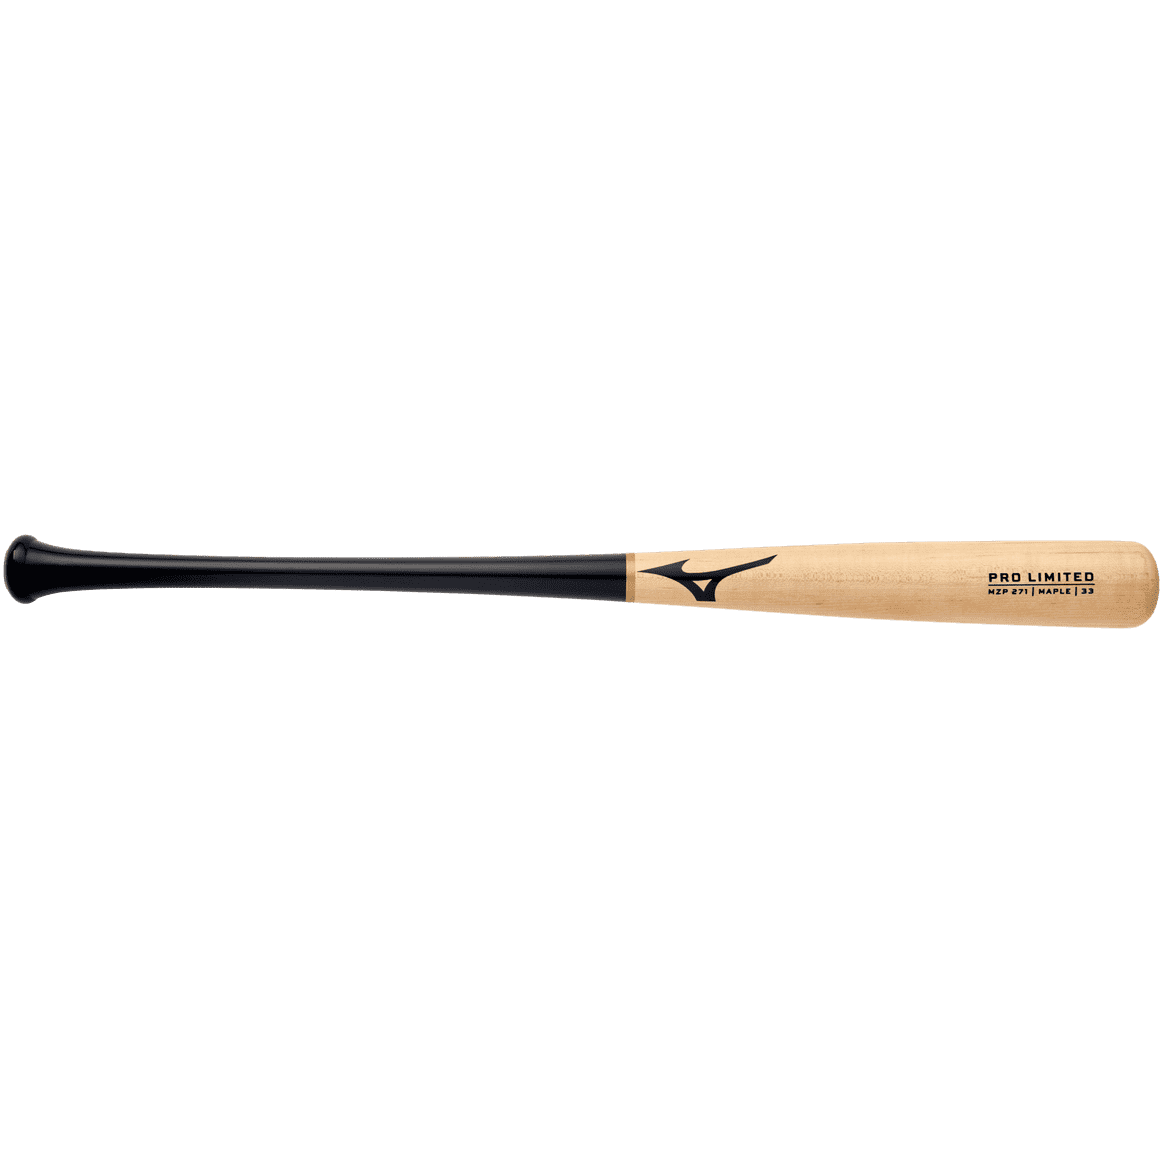 Mizuno Mzp 271 Pro Limited Maple Wood Baseball Bat - Natural Black - HIT a Double